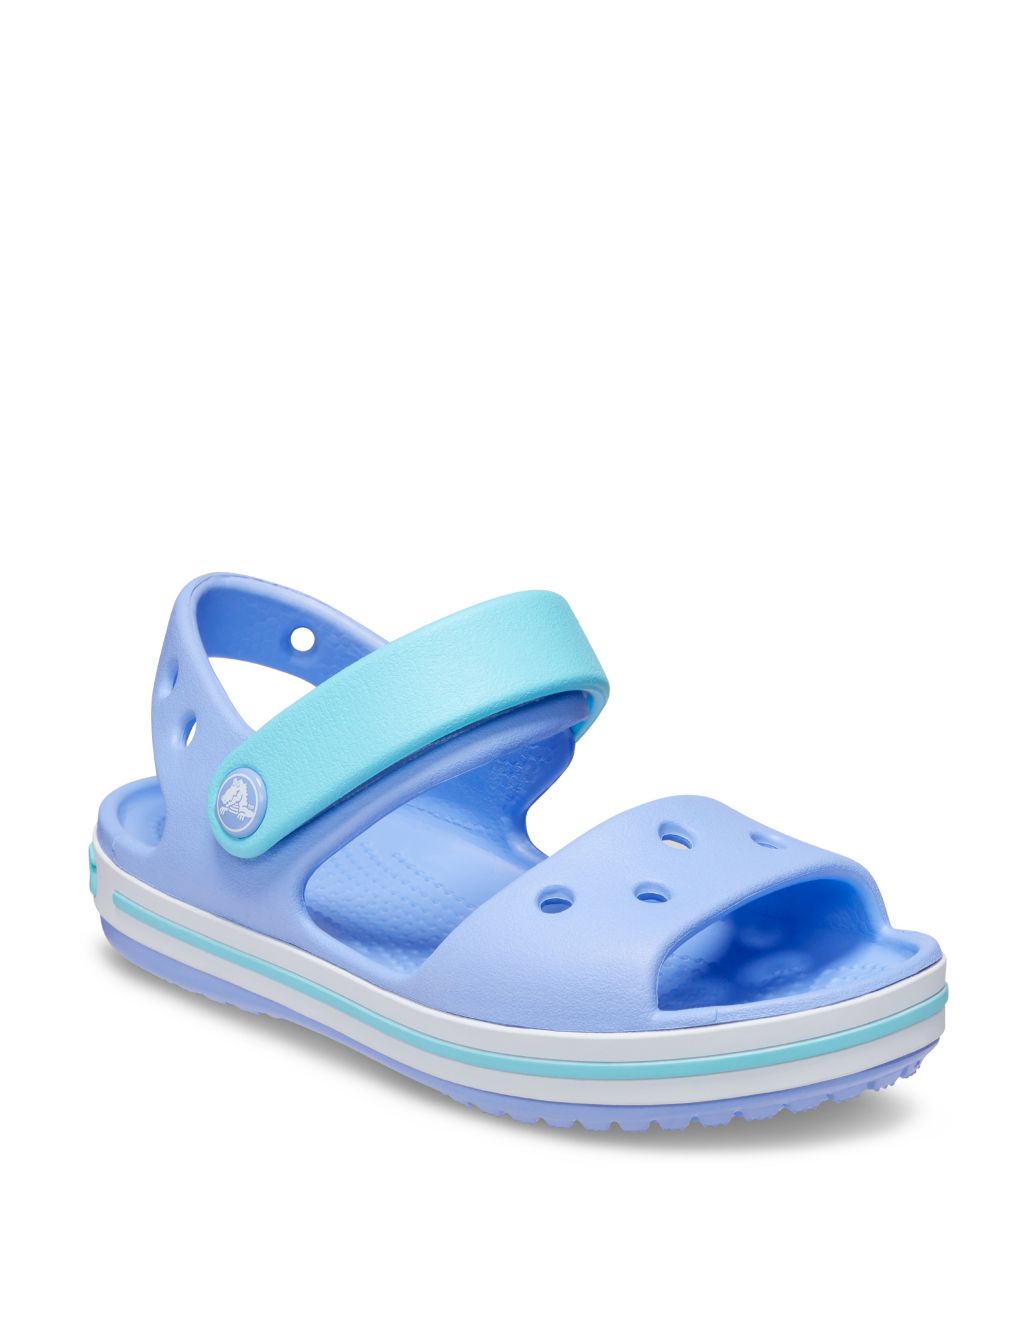 Kids' Crocband™ Riptape Sandals (4 Small - 3 Large) image 2